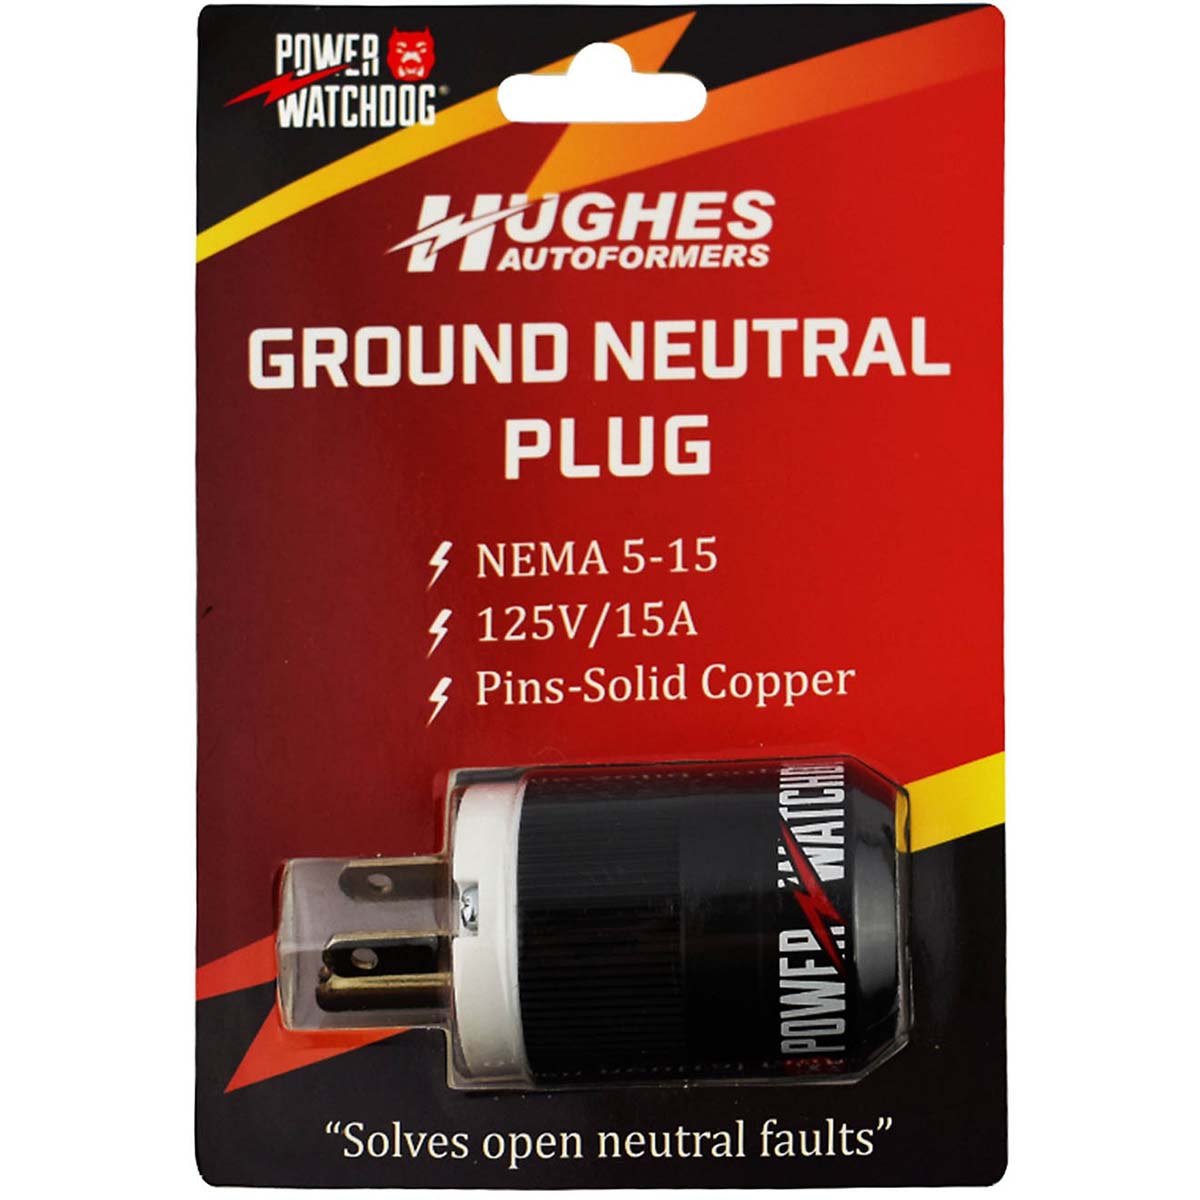 Hughes GNBPLUG Ground Neutral Bonding Plug for Generators with Floating Neutrals